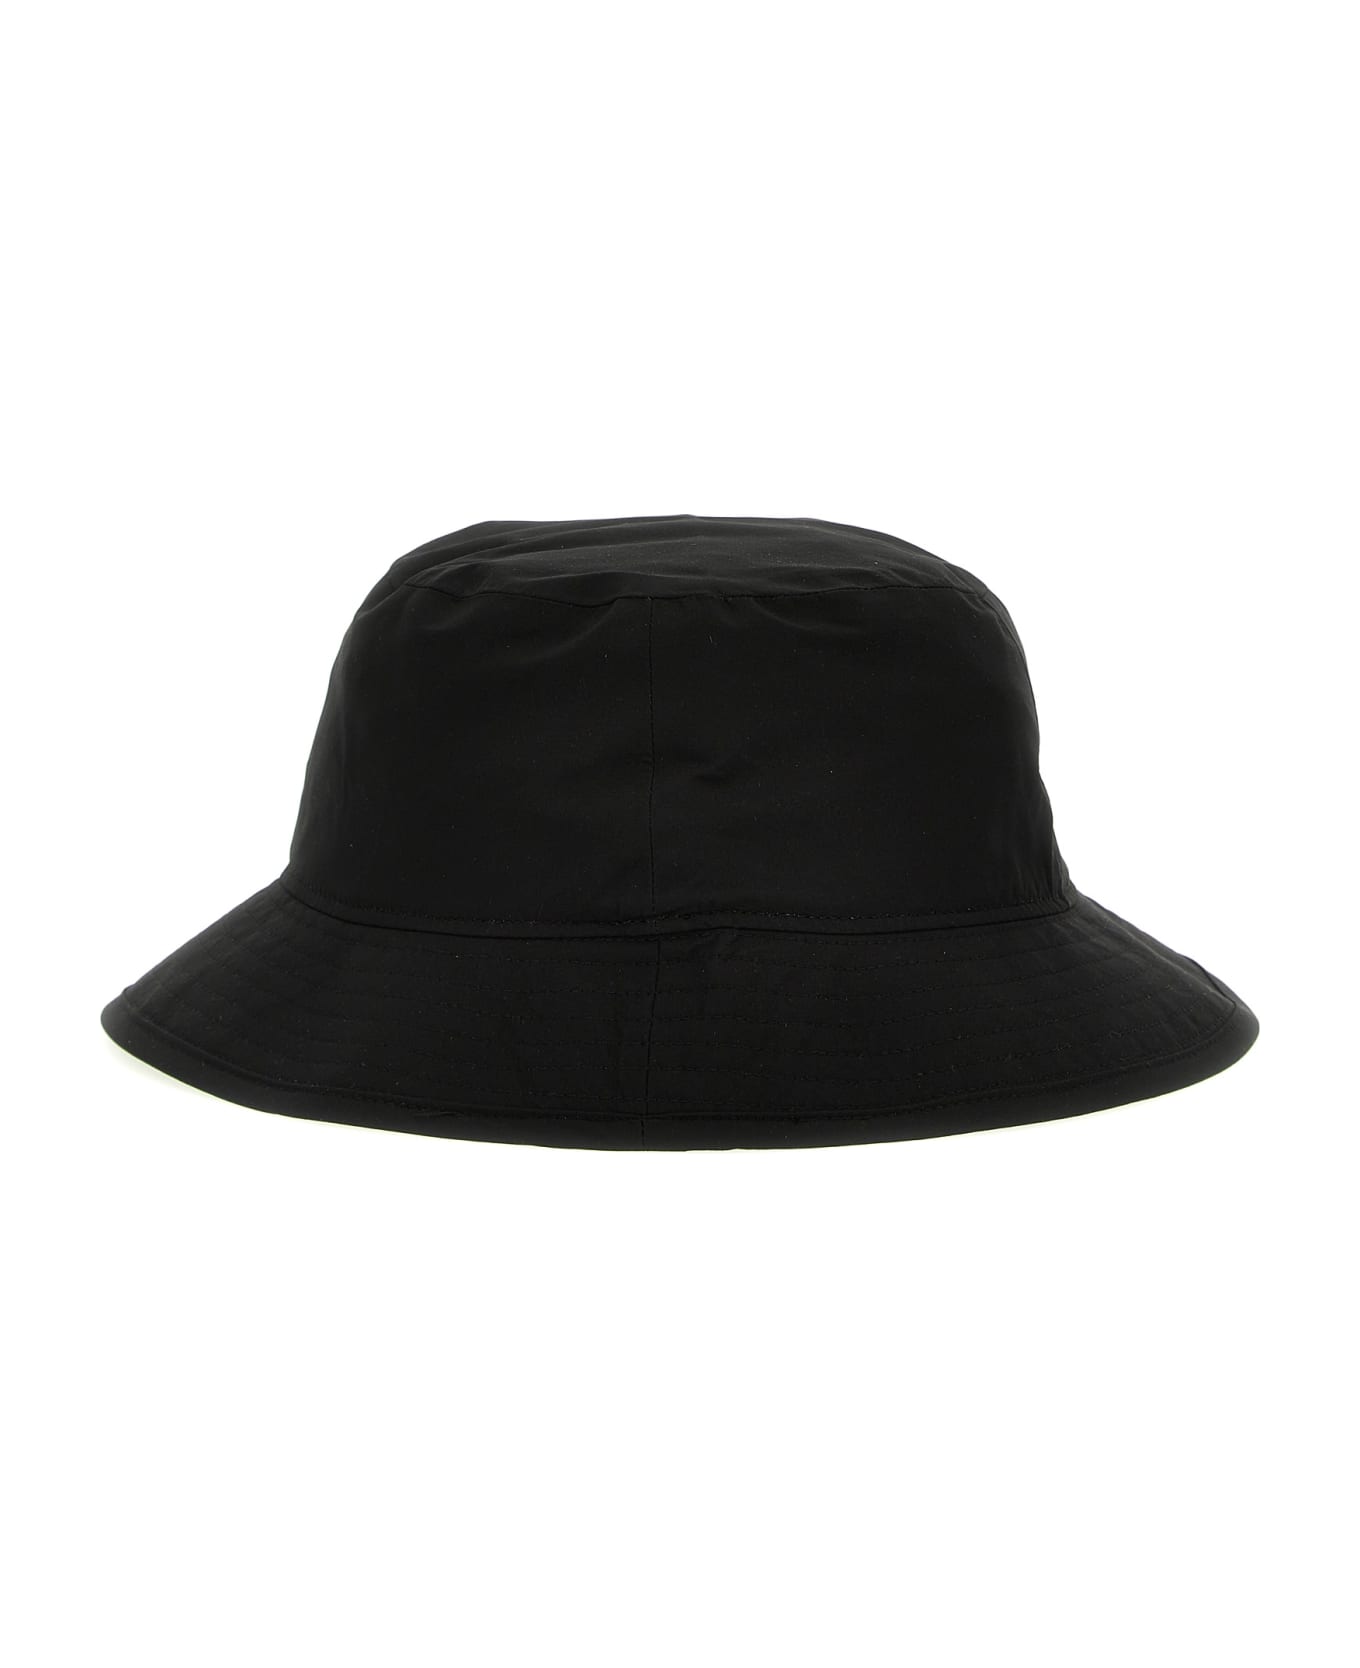 C.P. Company 'metropolis Series' Bucket Hat 帽子